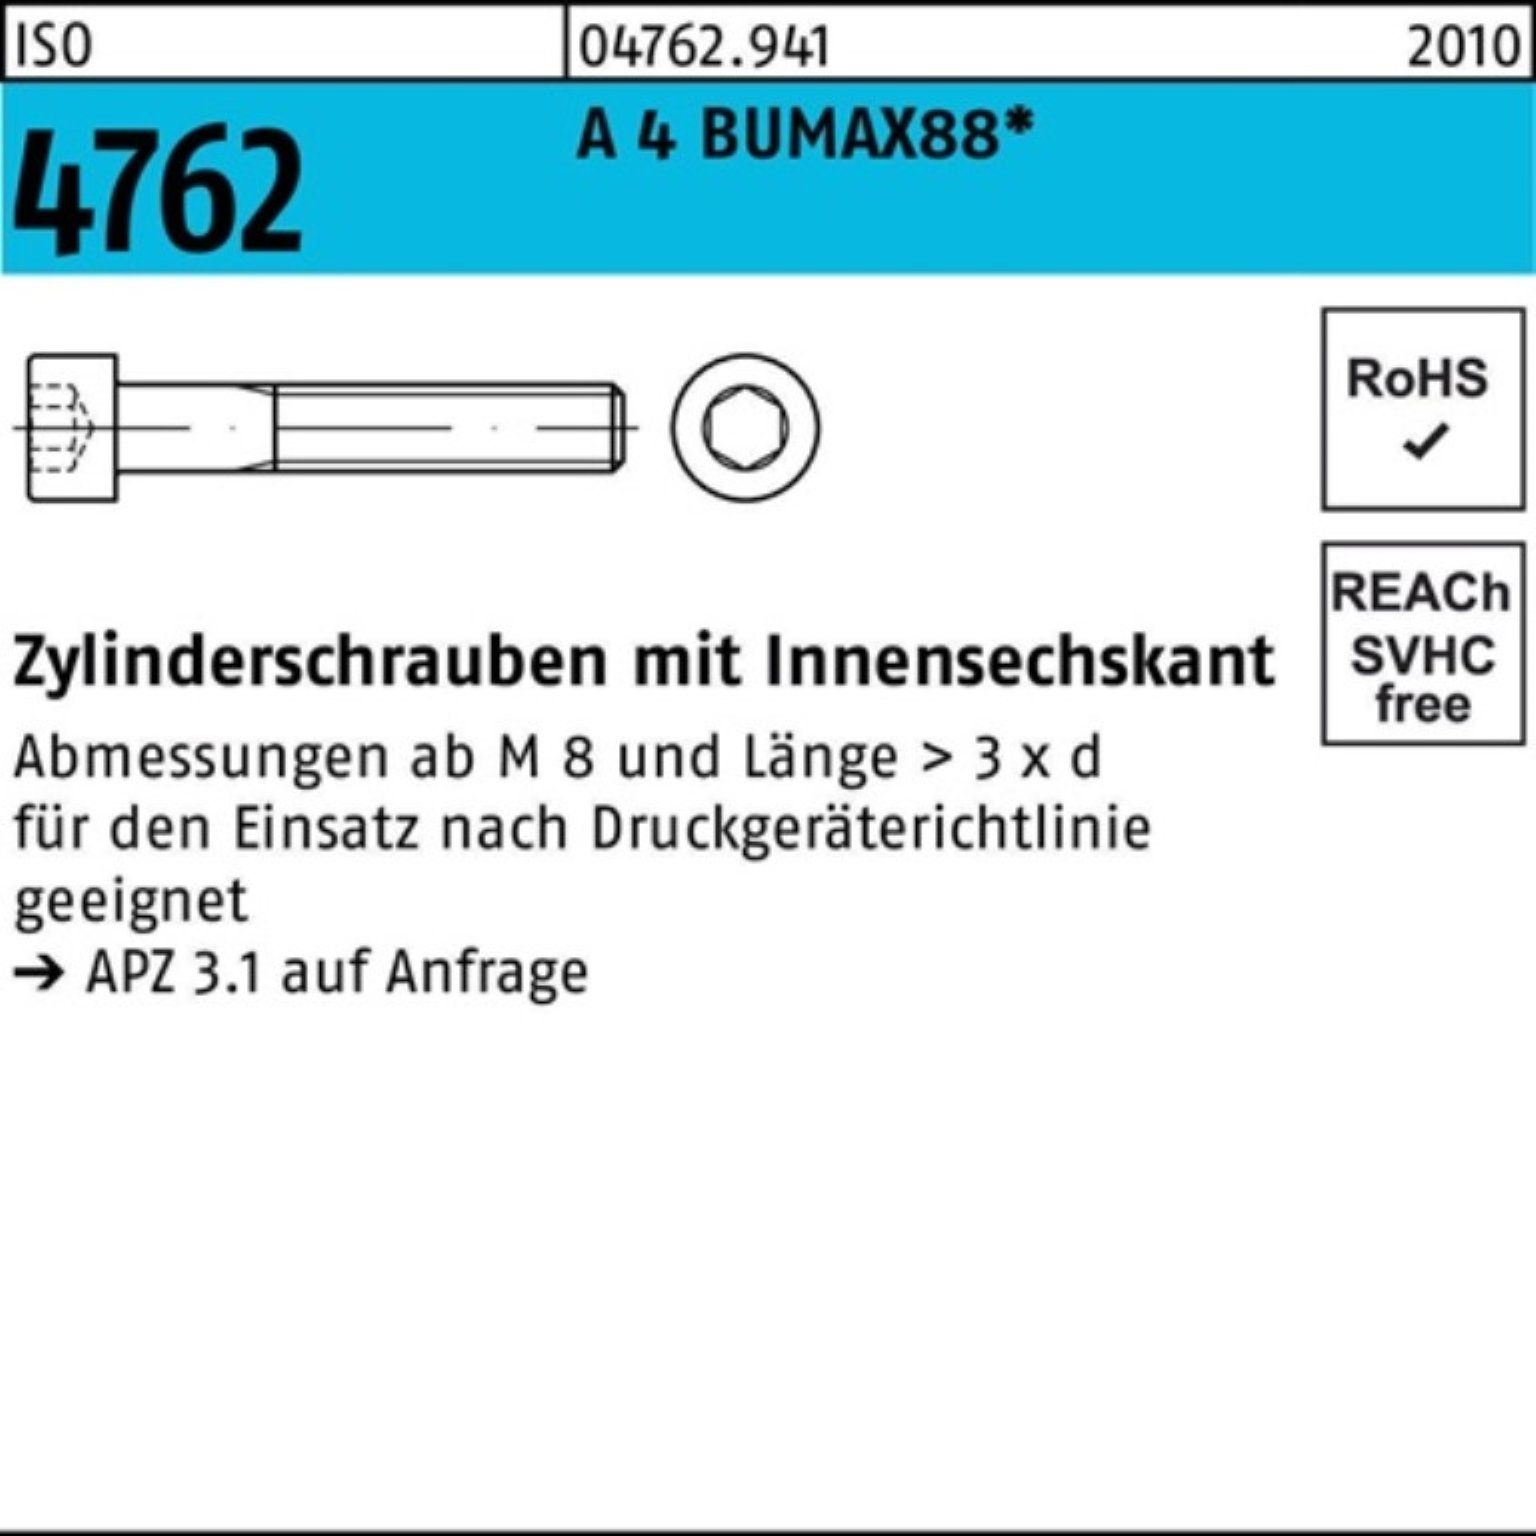 Bufab Zylinderschraube 100er Pack Zylinderschraube ISO 4762 Innen-6kt M12x 40 A 4 BUMAX88 25